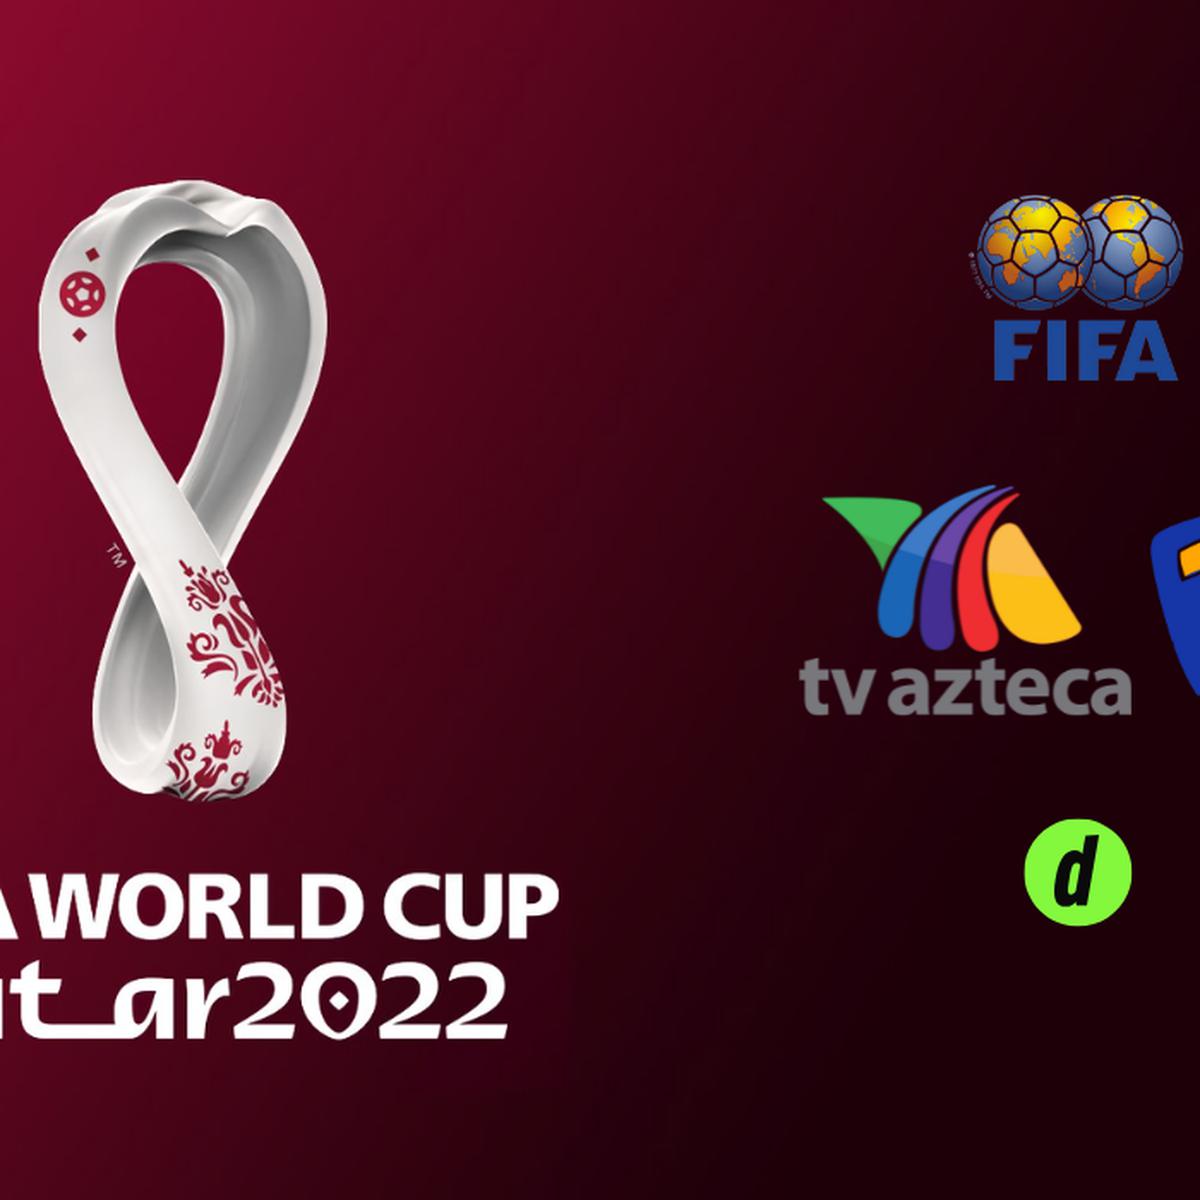 TV Azteca, cómo el Mundial de Qatar 2022 en México: partidos que pasará Azteca 7 | Programación 64 partidos | | ¿Qué partidos transmite Azteca 7? | Programación | TV Azteca | Selección Mexicana | MEXICO | DEPOR